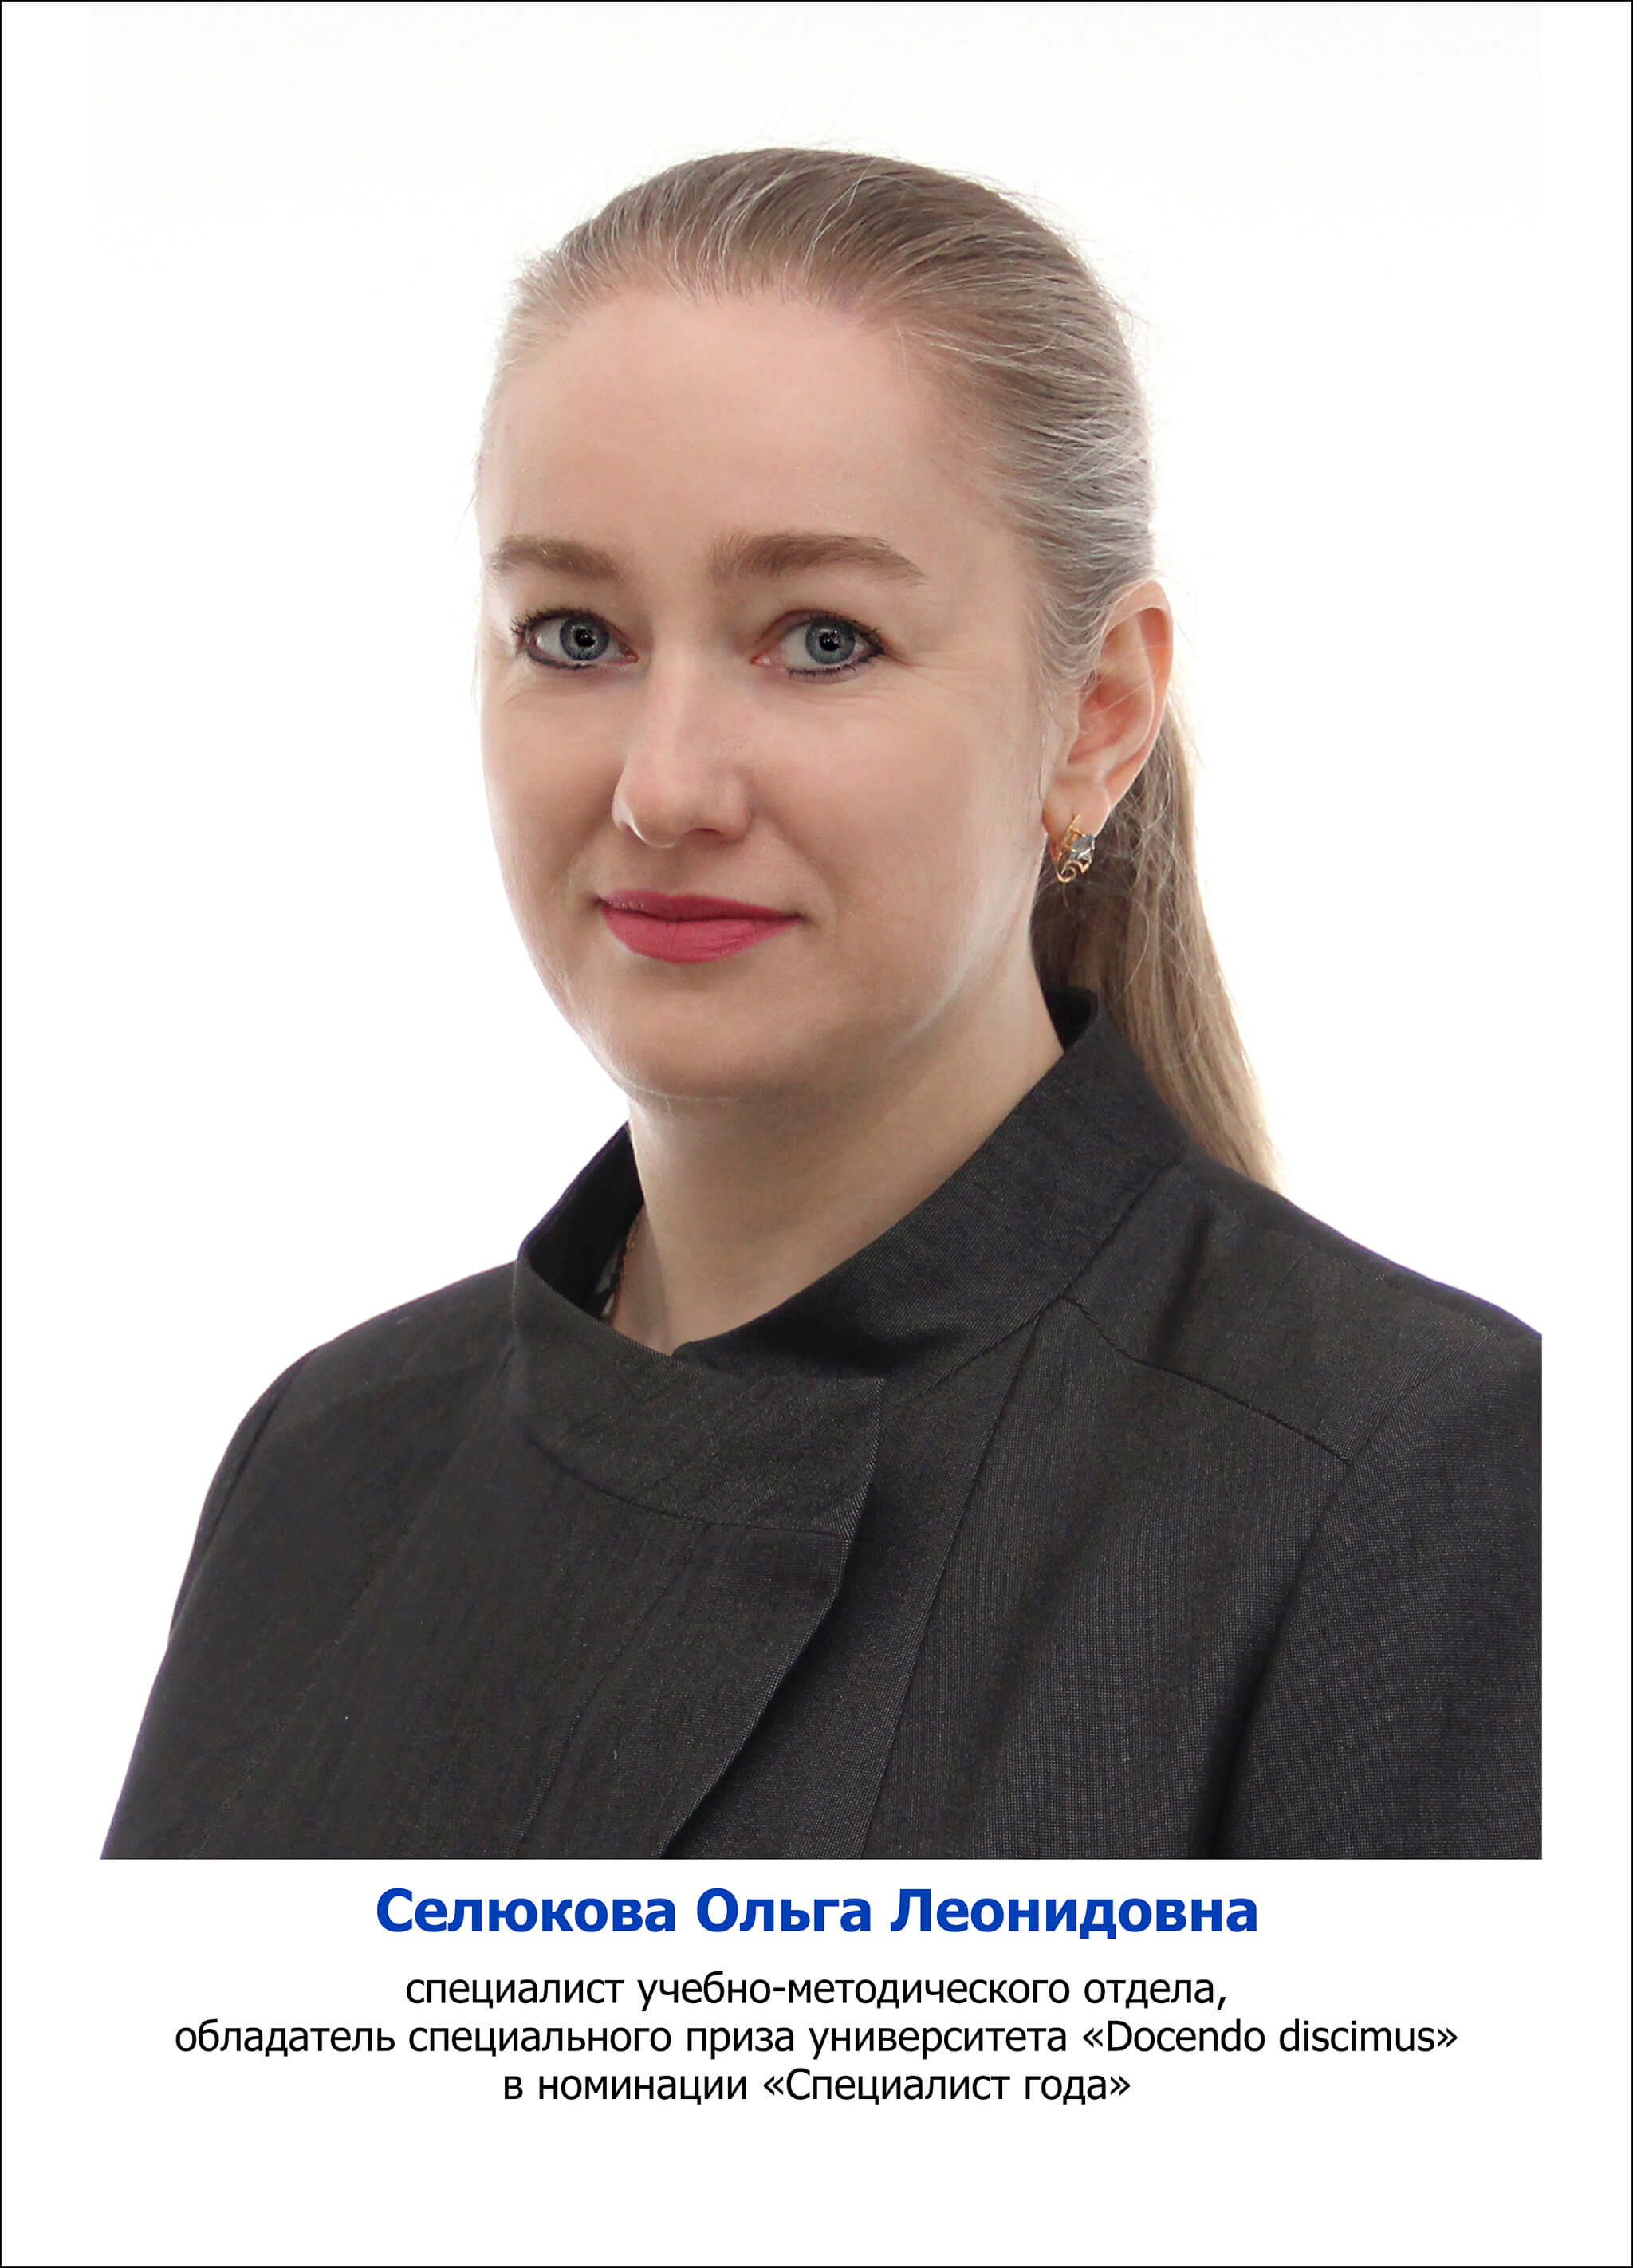 Селюкова Ольга Леонидовна